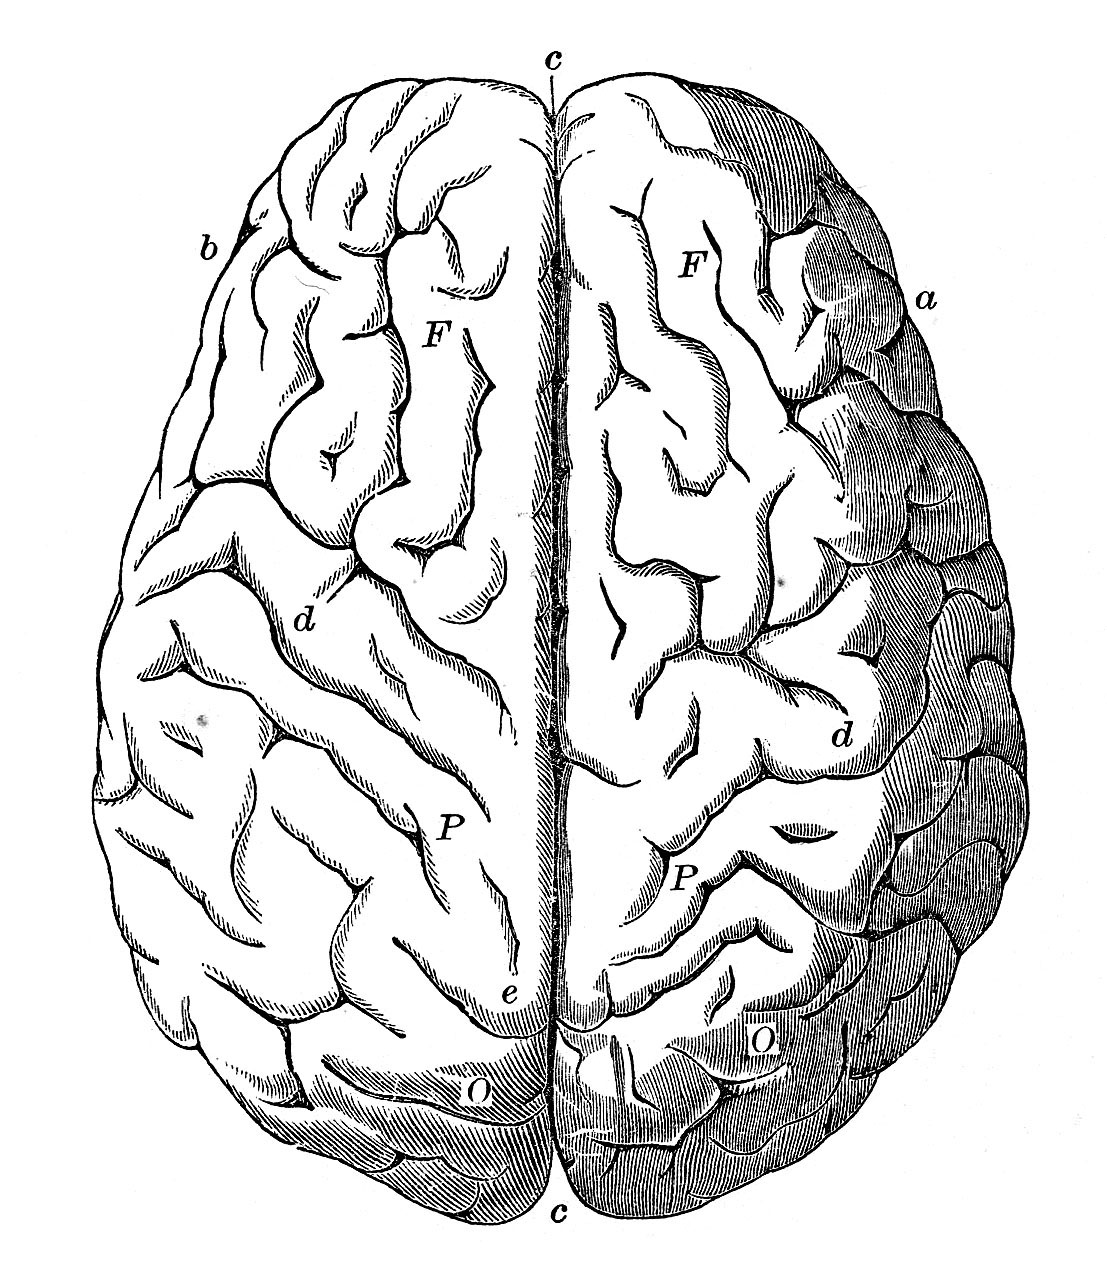 Картинка полушарие мозга. Мозг вид сверху. Человеческий мозг вид сверху. Симметричный мозг. Полушария мозга вид сверху.